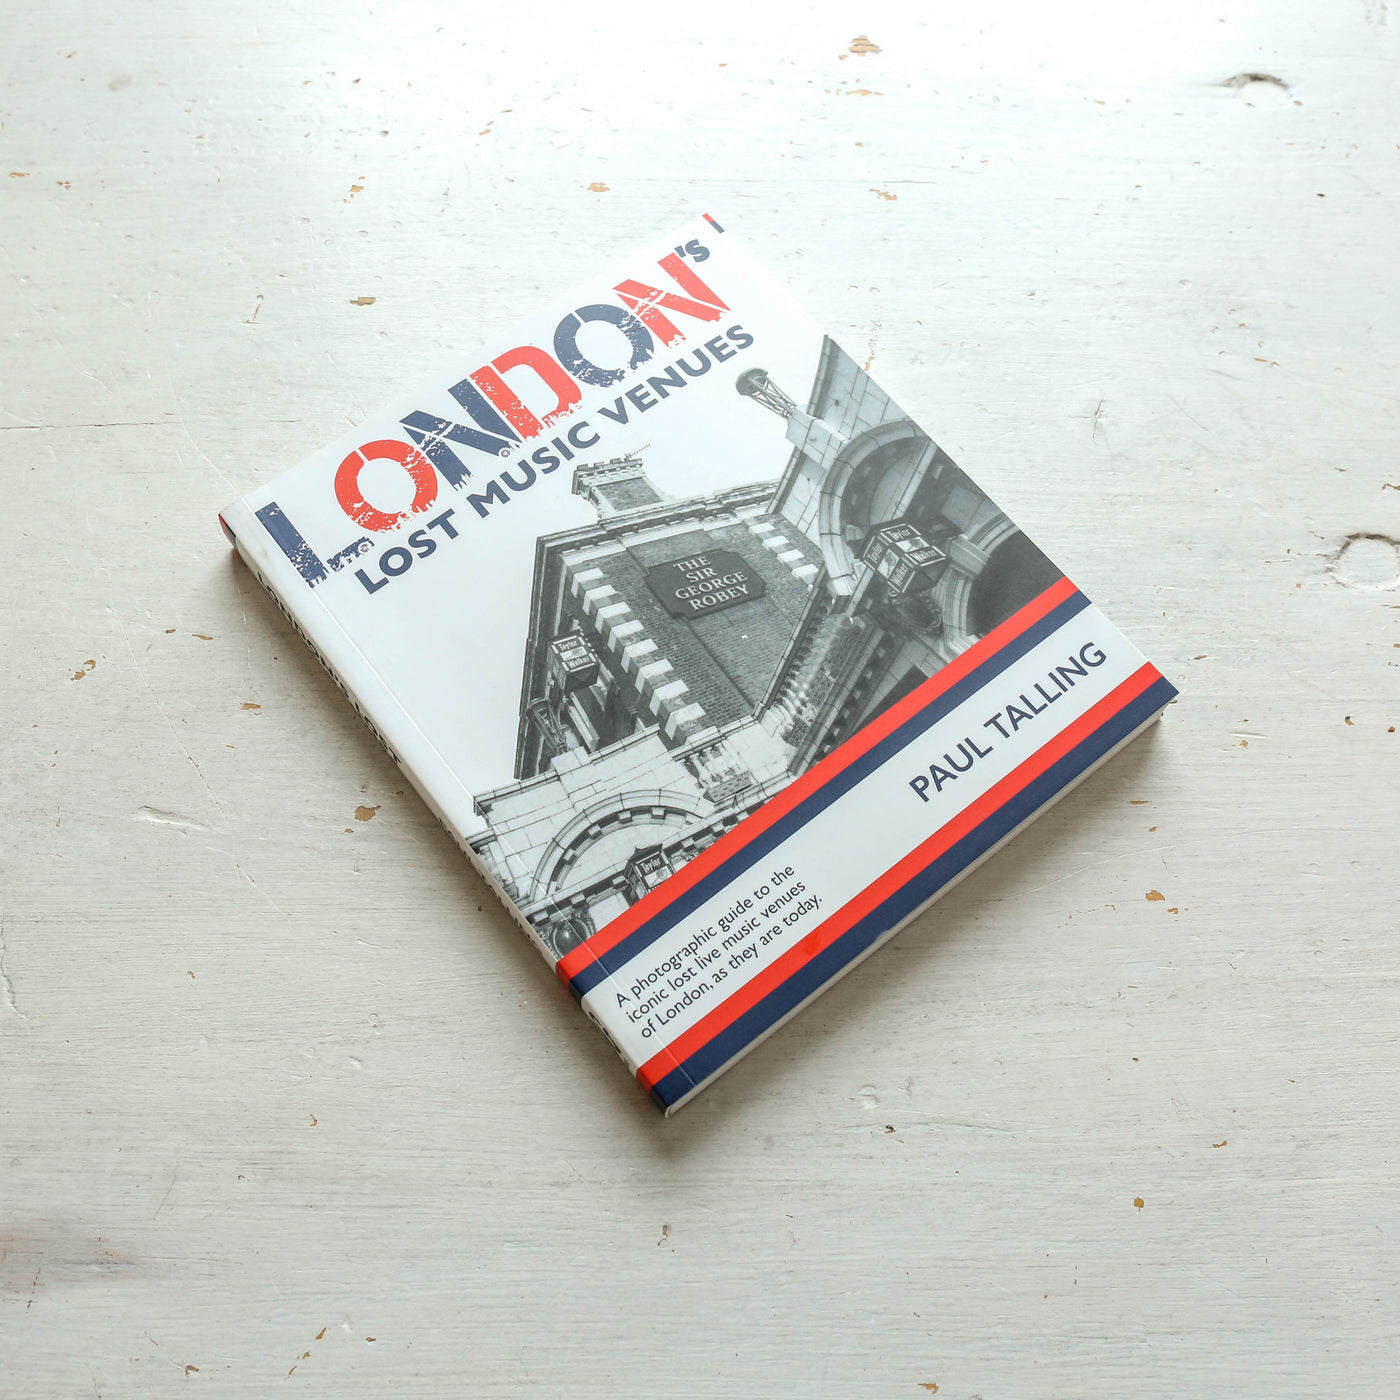 London's Lost Music Venues Book